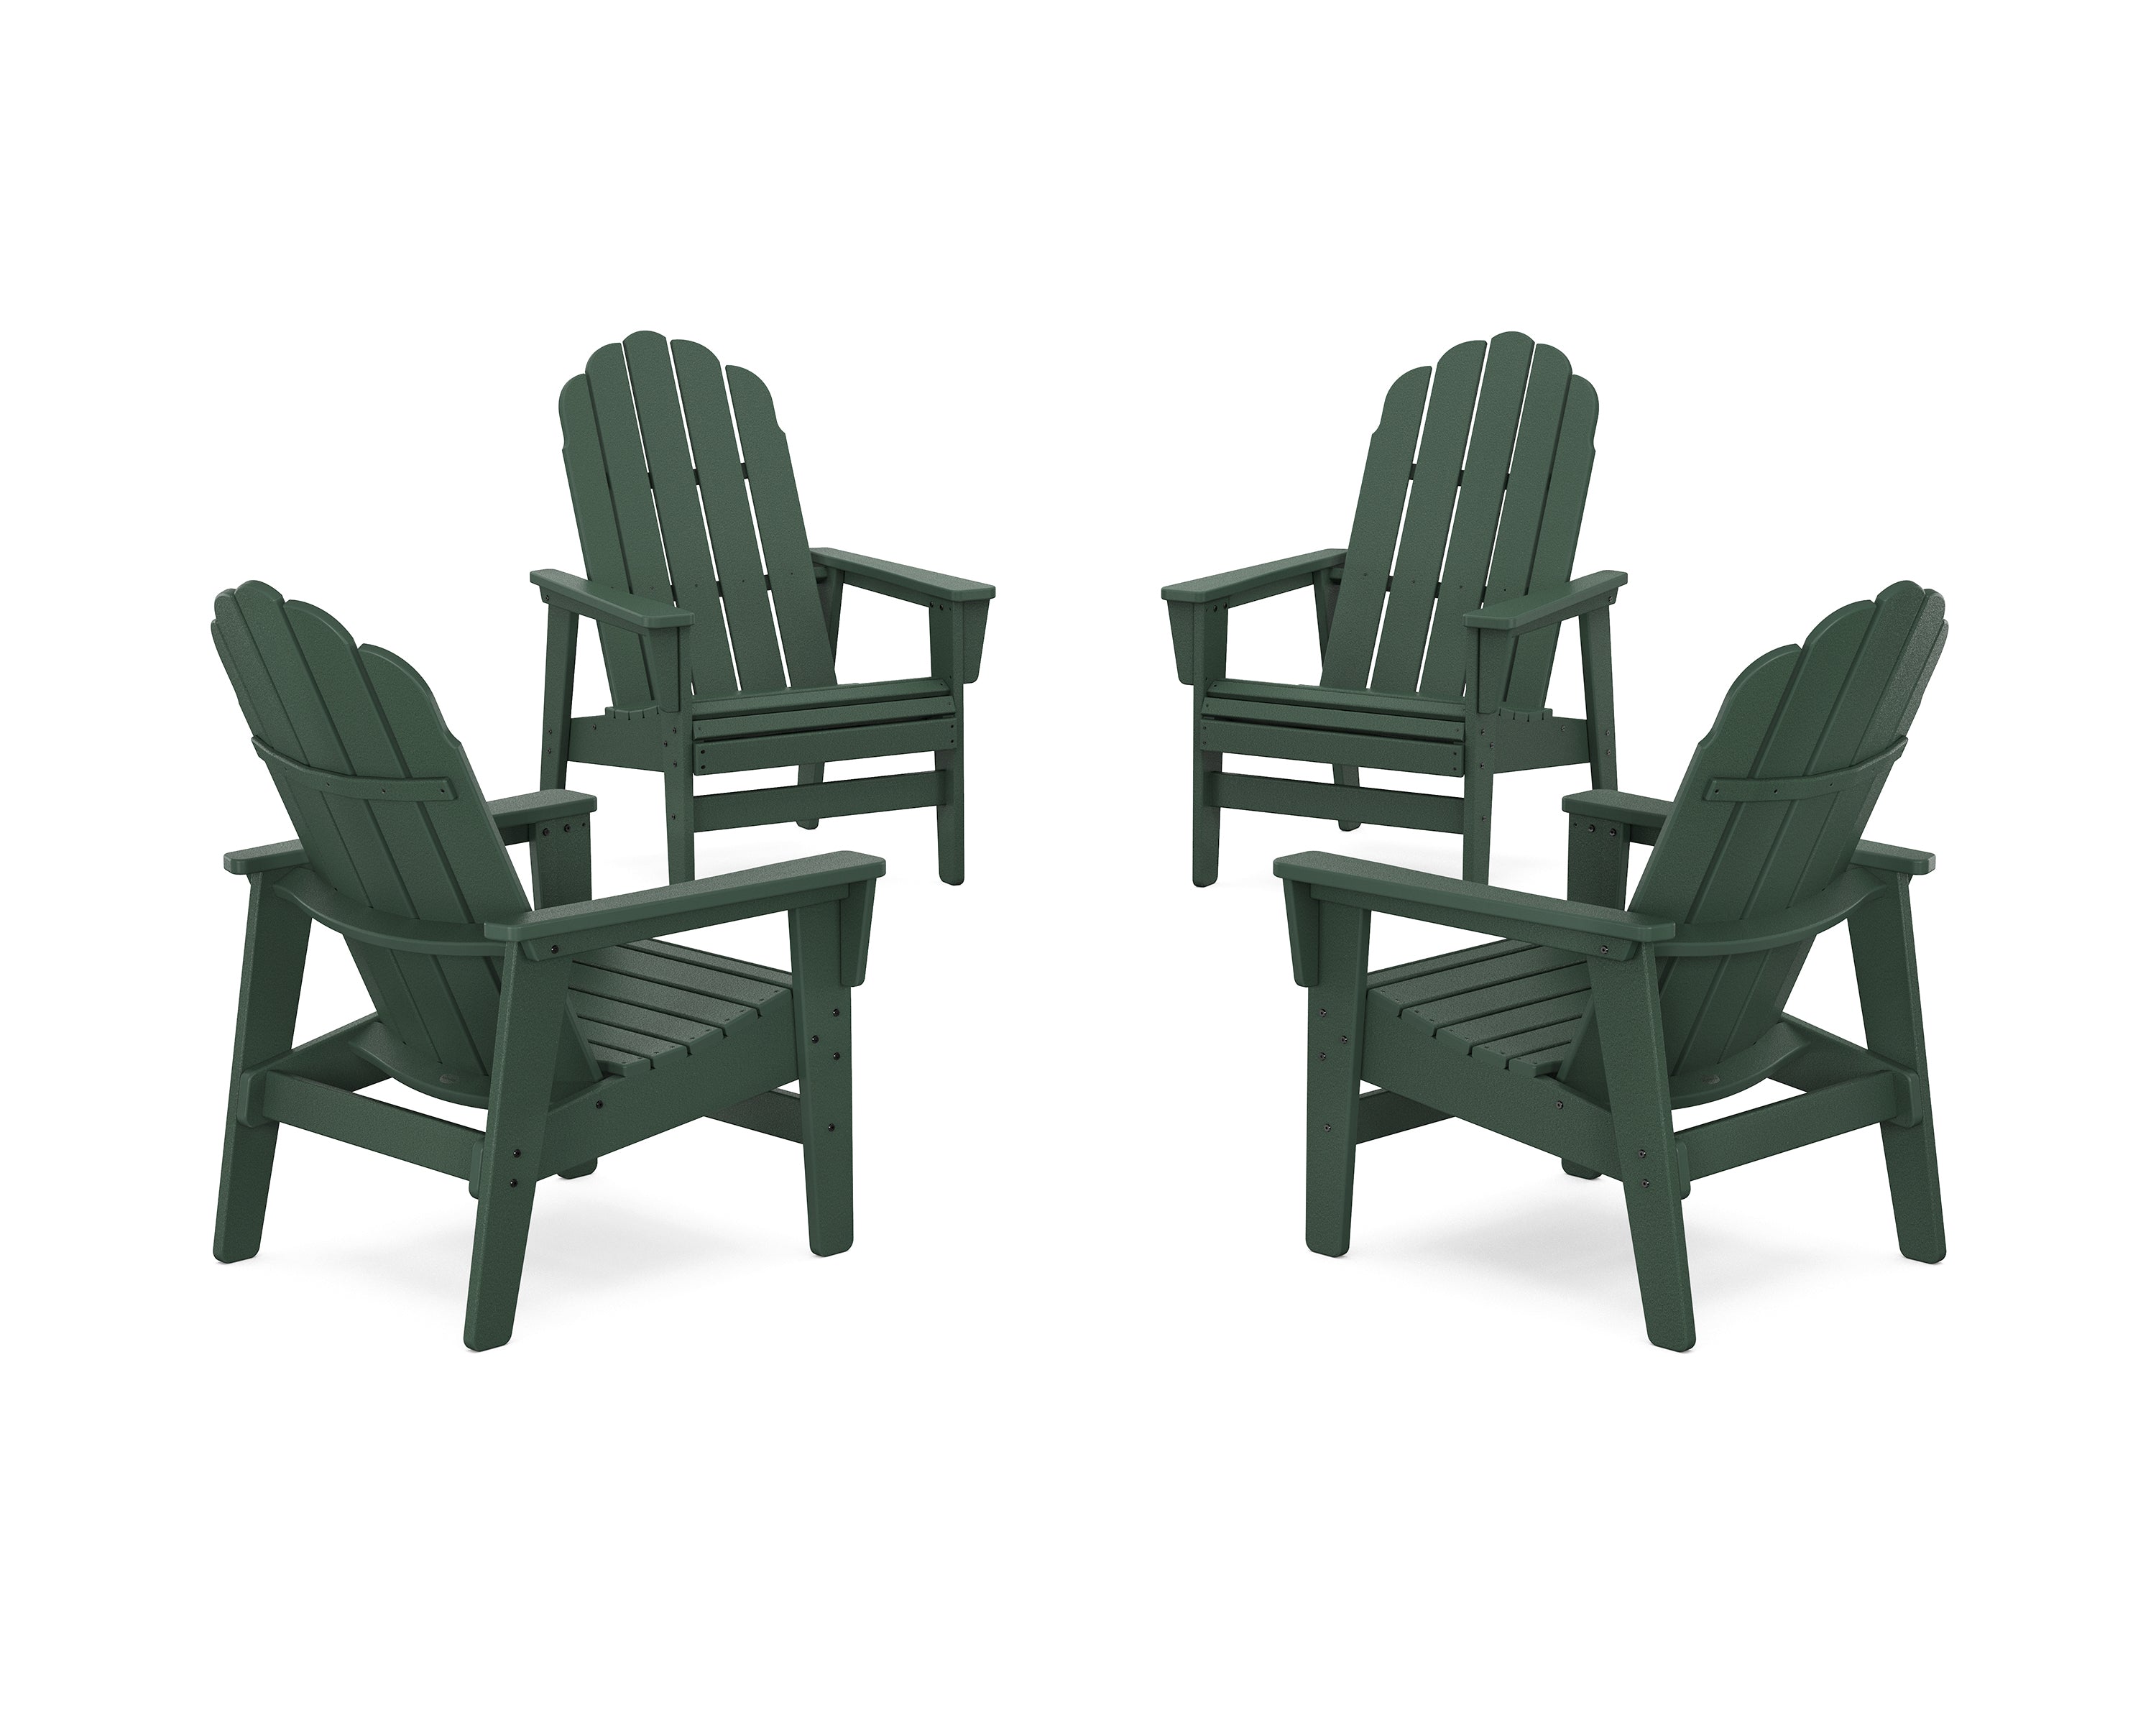 POLYWOOD® 4-Piece Vineyard Grand Upright Adirondack Chair Conversation Set in Green